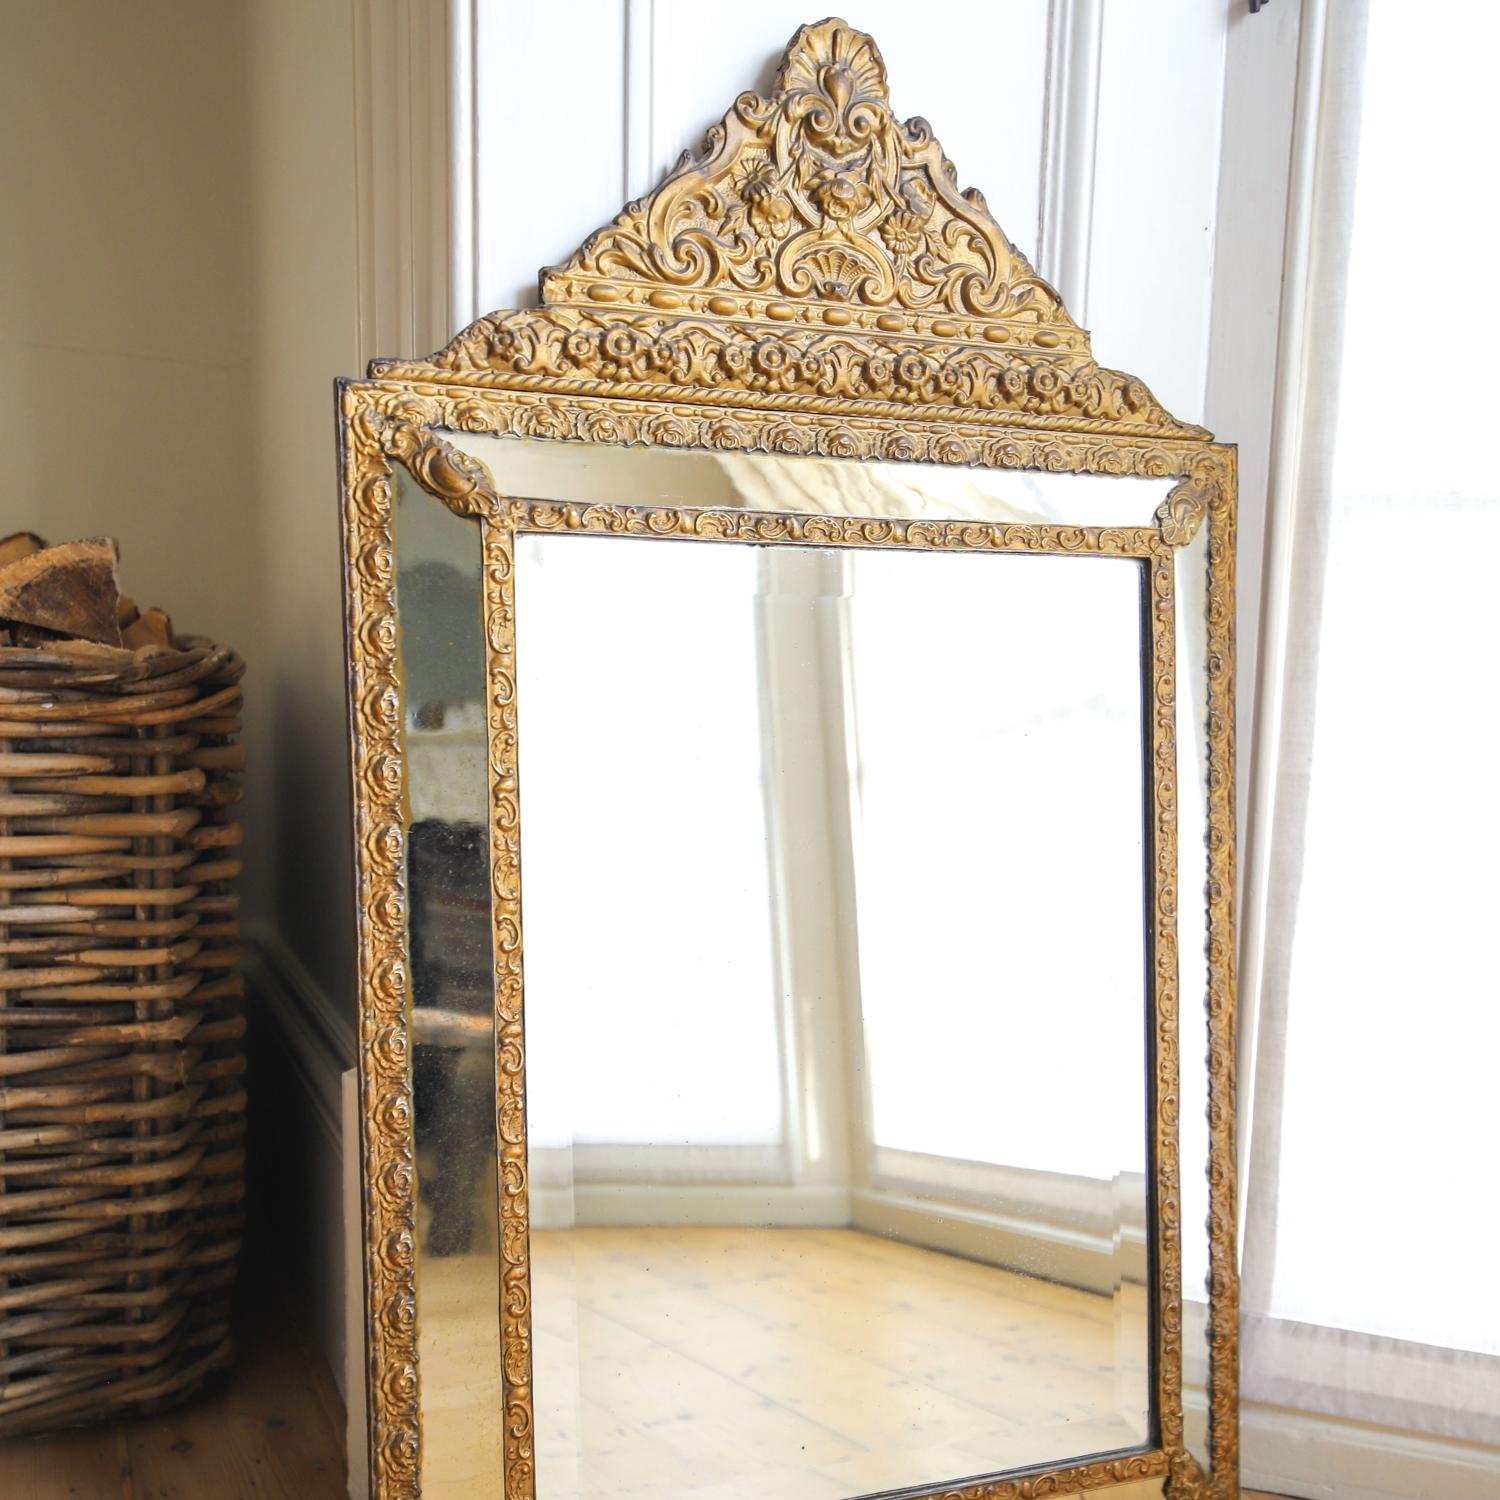 19th century French antique cushion mirror